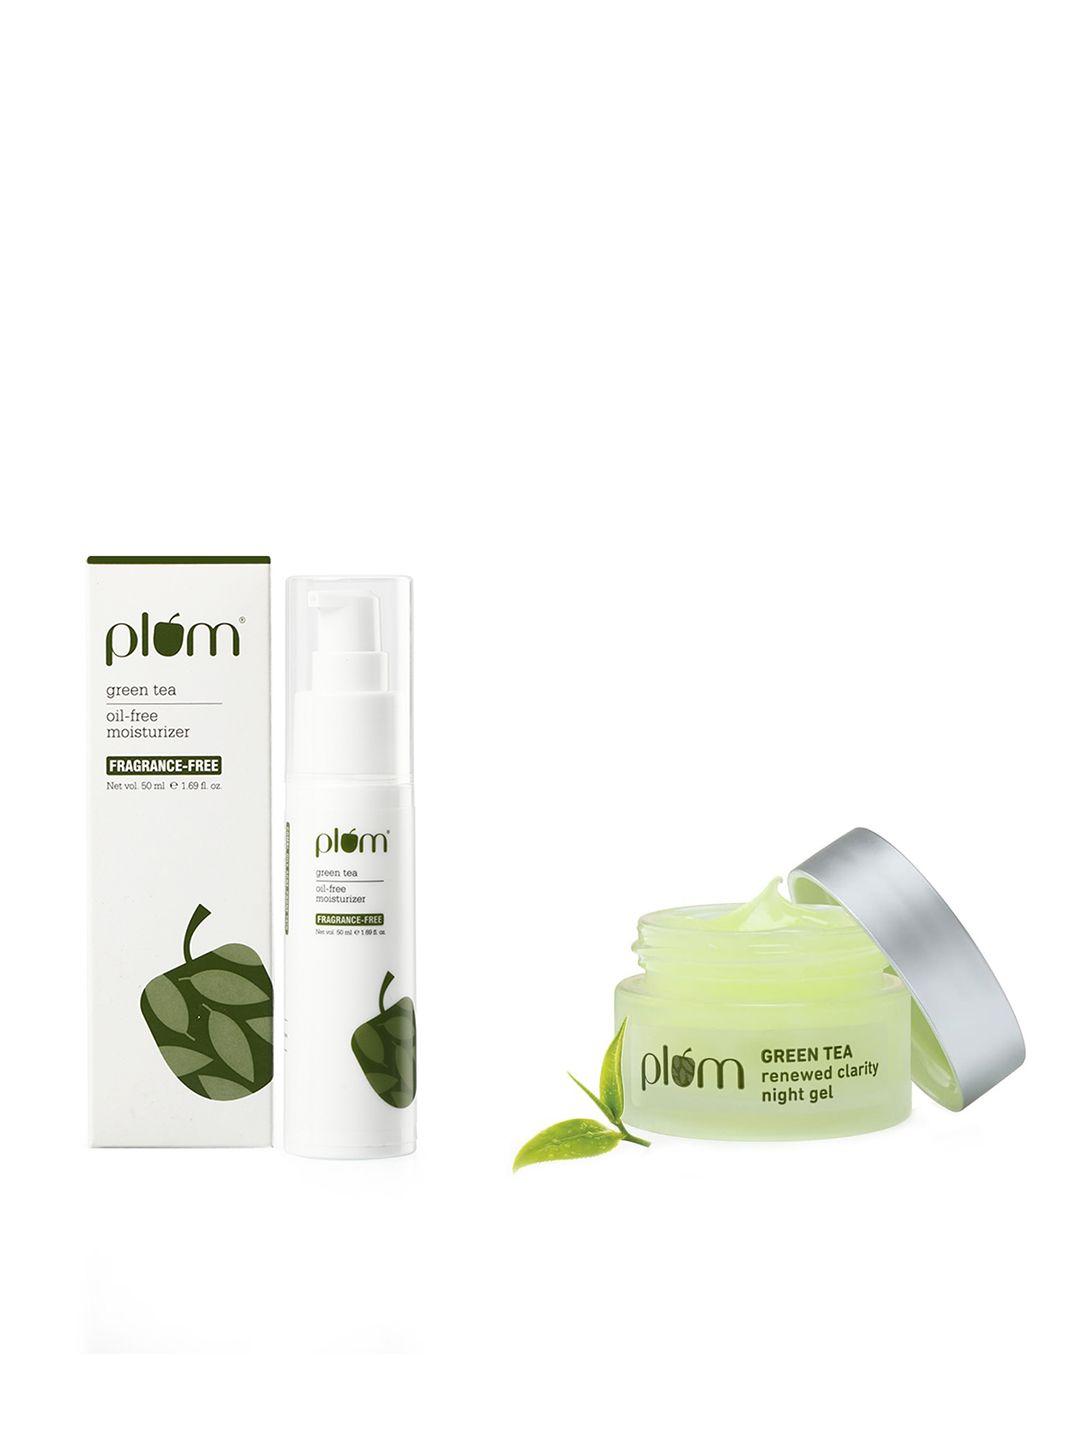 plum set of green tea moisturizer - 50 ml & green tea renewed clarity night gel - 15 ml